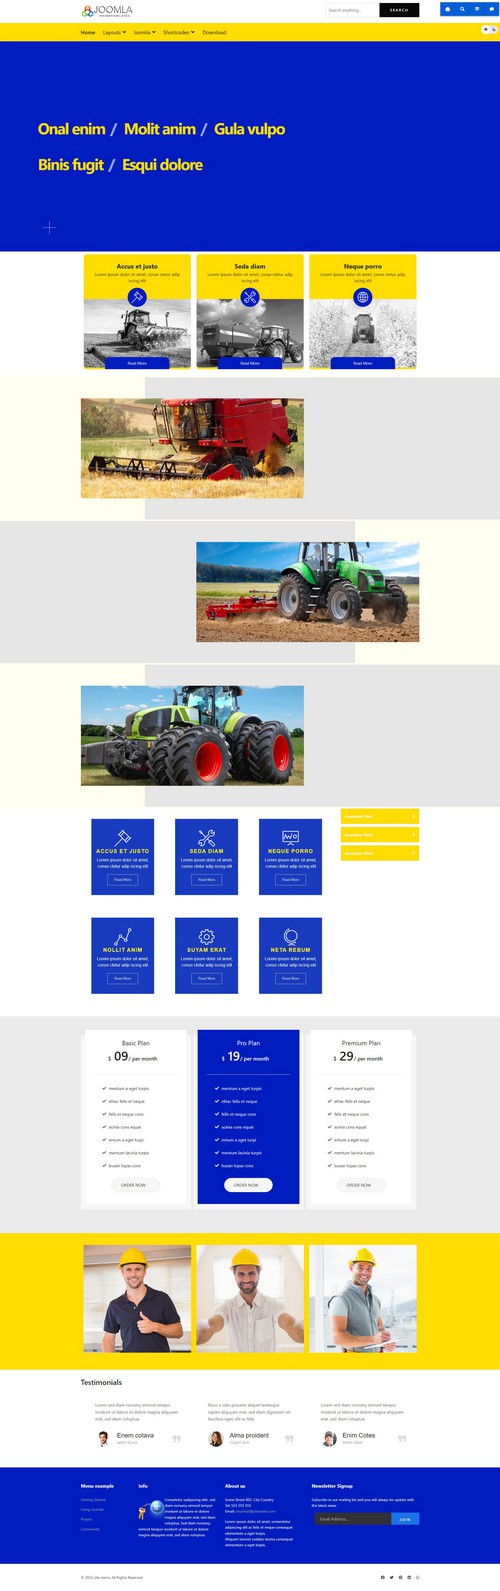 Mx_joomla224 - Professional Agrarian Equipment Joomla Template